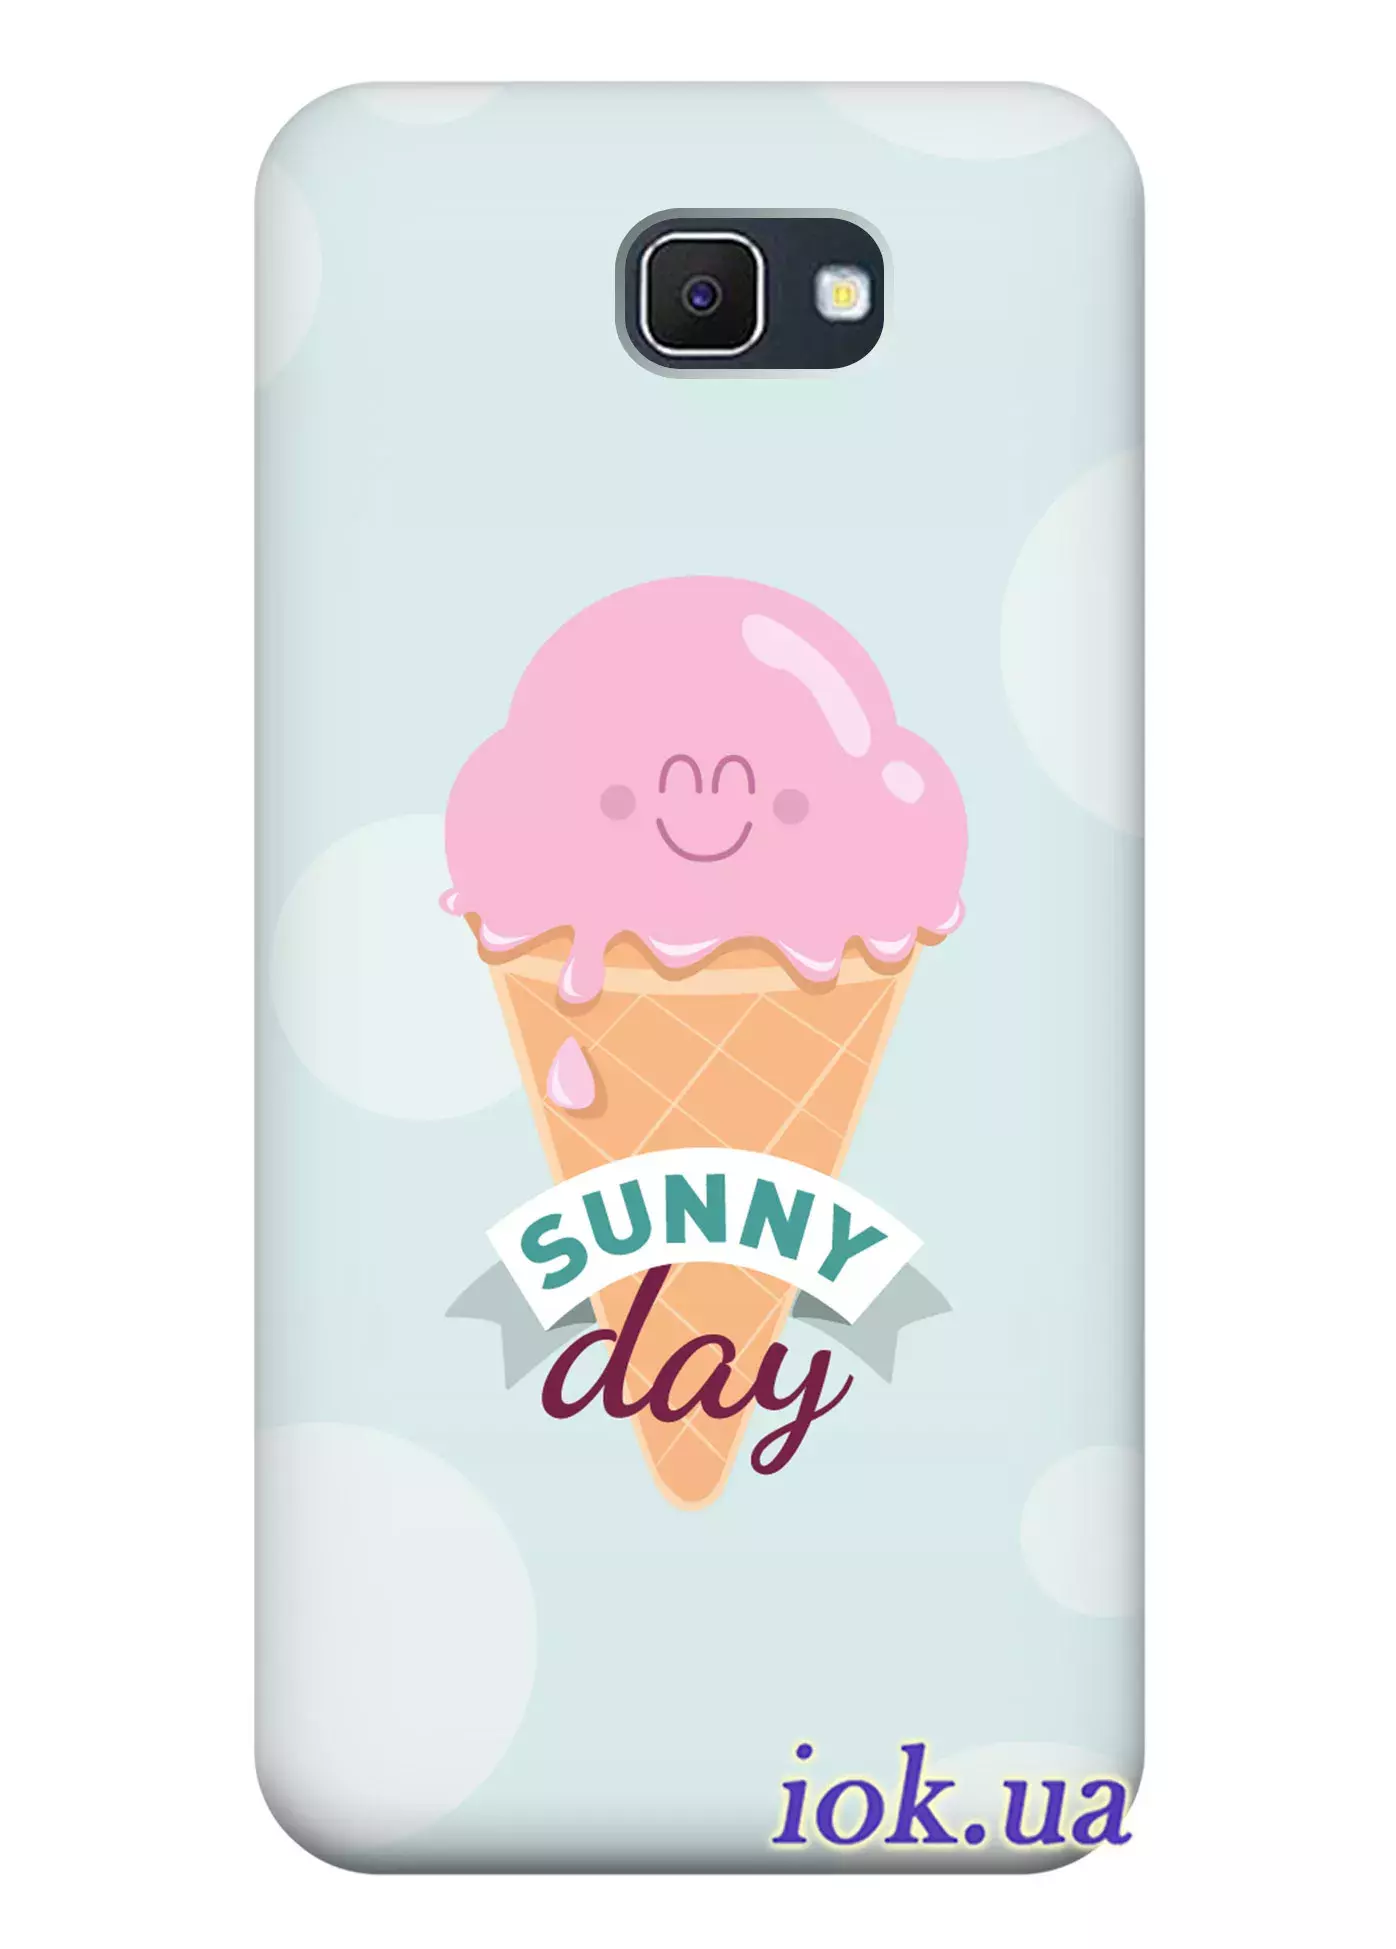 Чехол для Galaxy J5 Prime - Sunny day